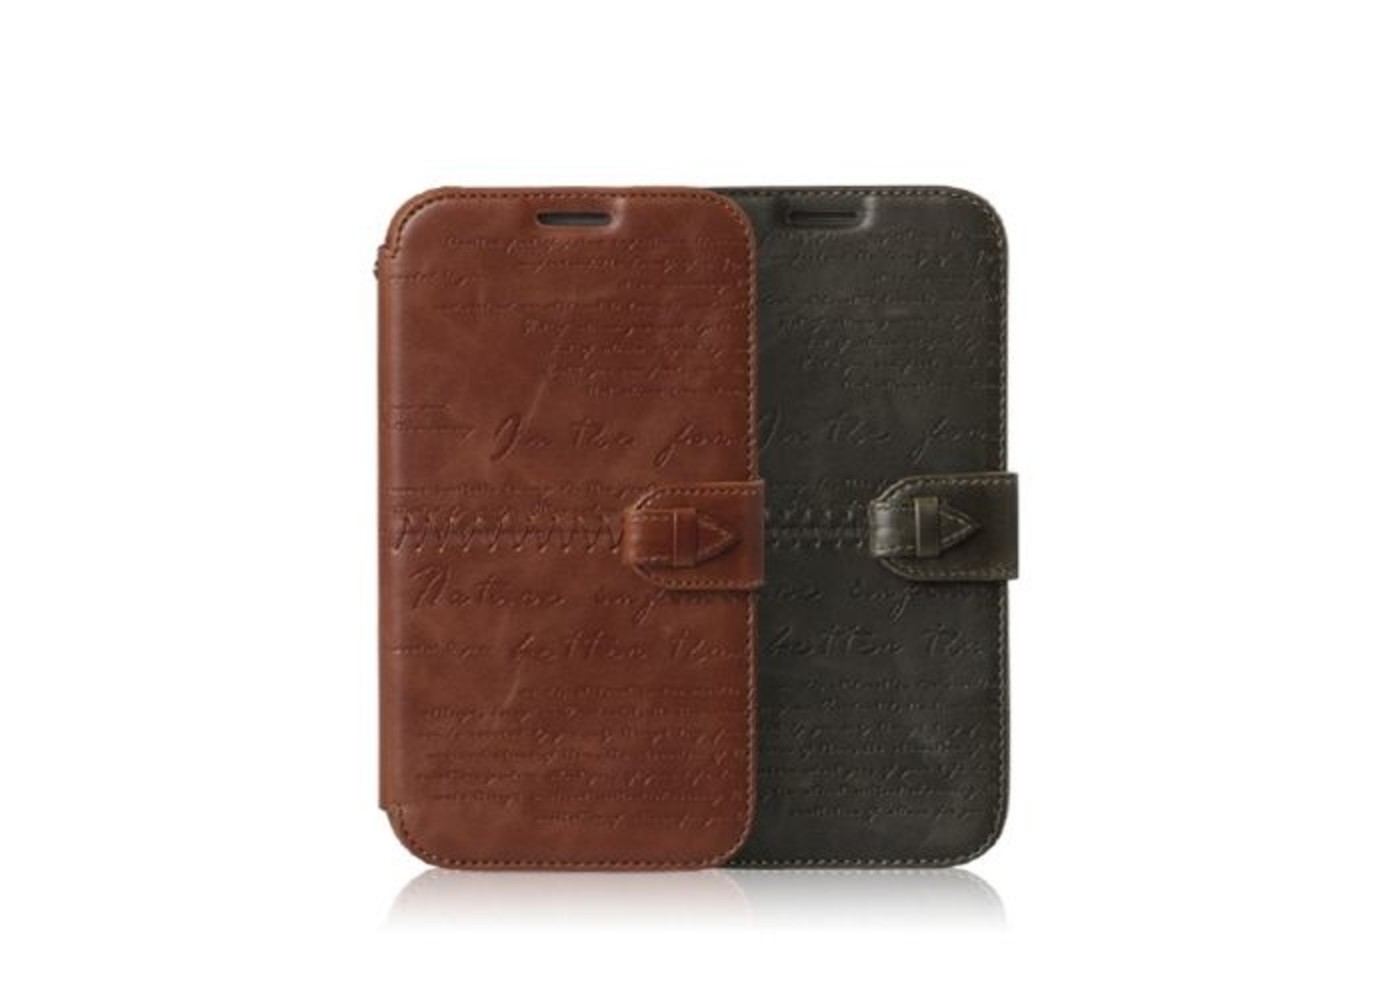 Zenus Galaxy Note 2 Masstige Lettering Diary Series -Khaki